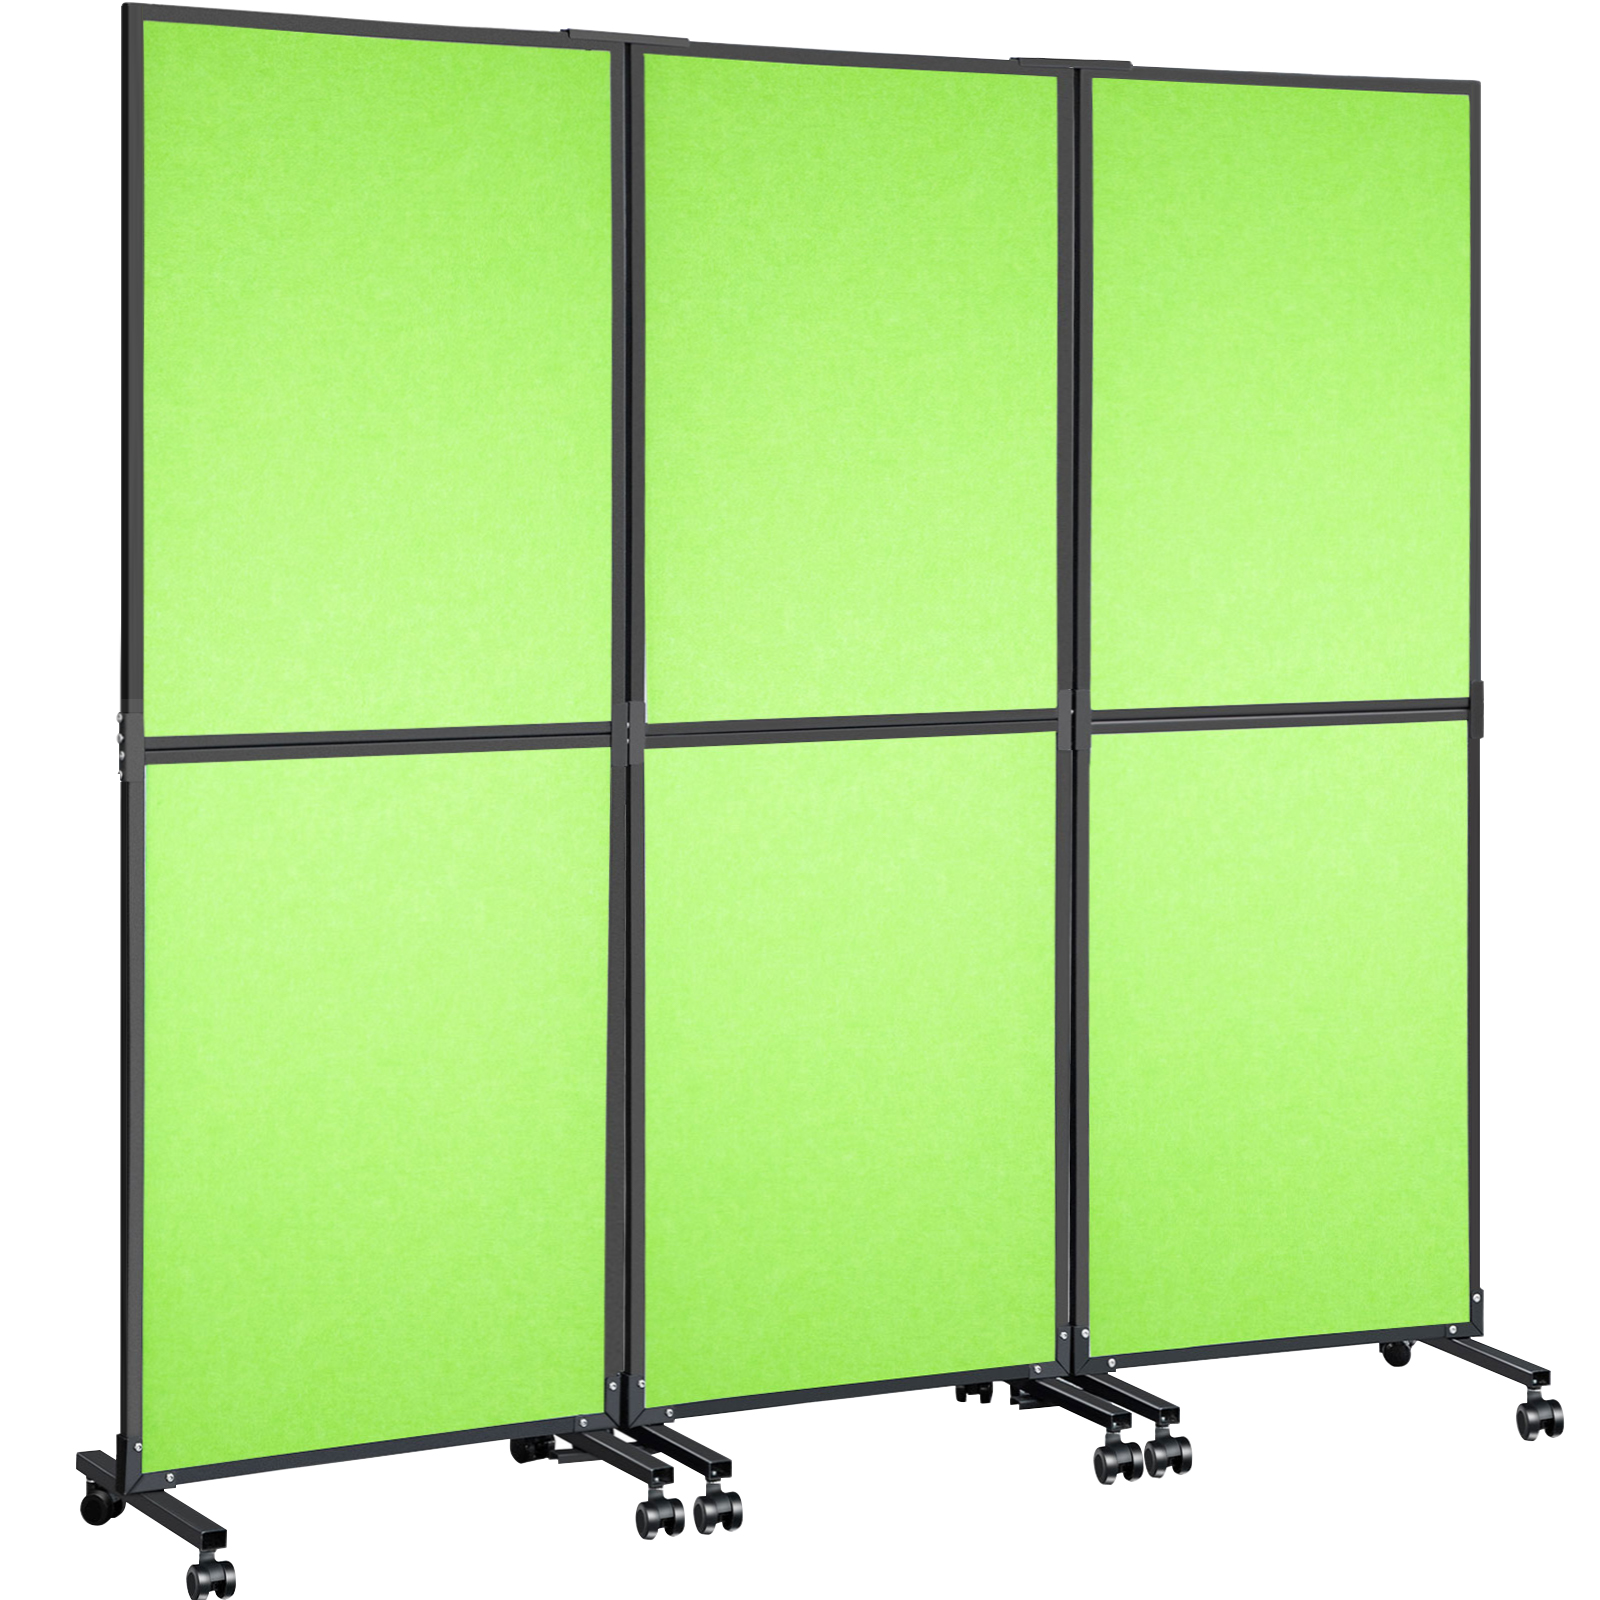 Vevor Acoustic Room Divider Office Partition Panel 72" X 66" 3 Pack In Tea Green от Vevor Many GEOs